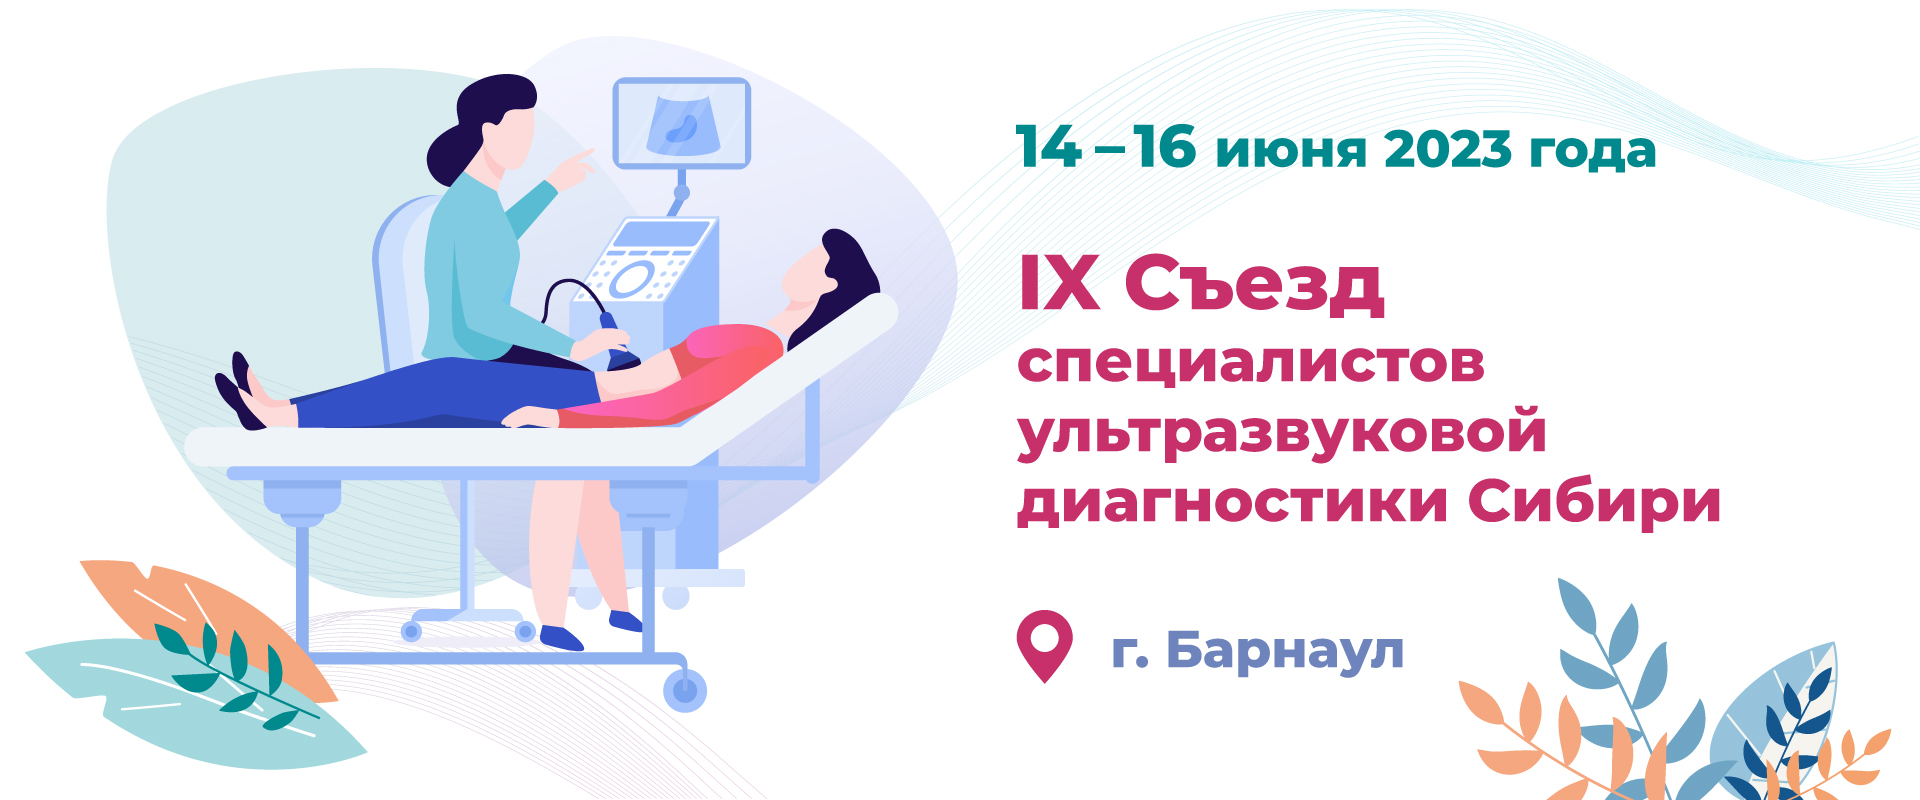 IX Съезд специалистов ультразвуковой диагностики Сибири